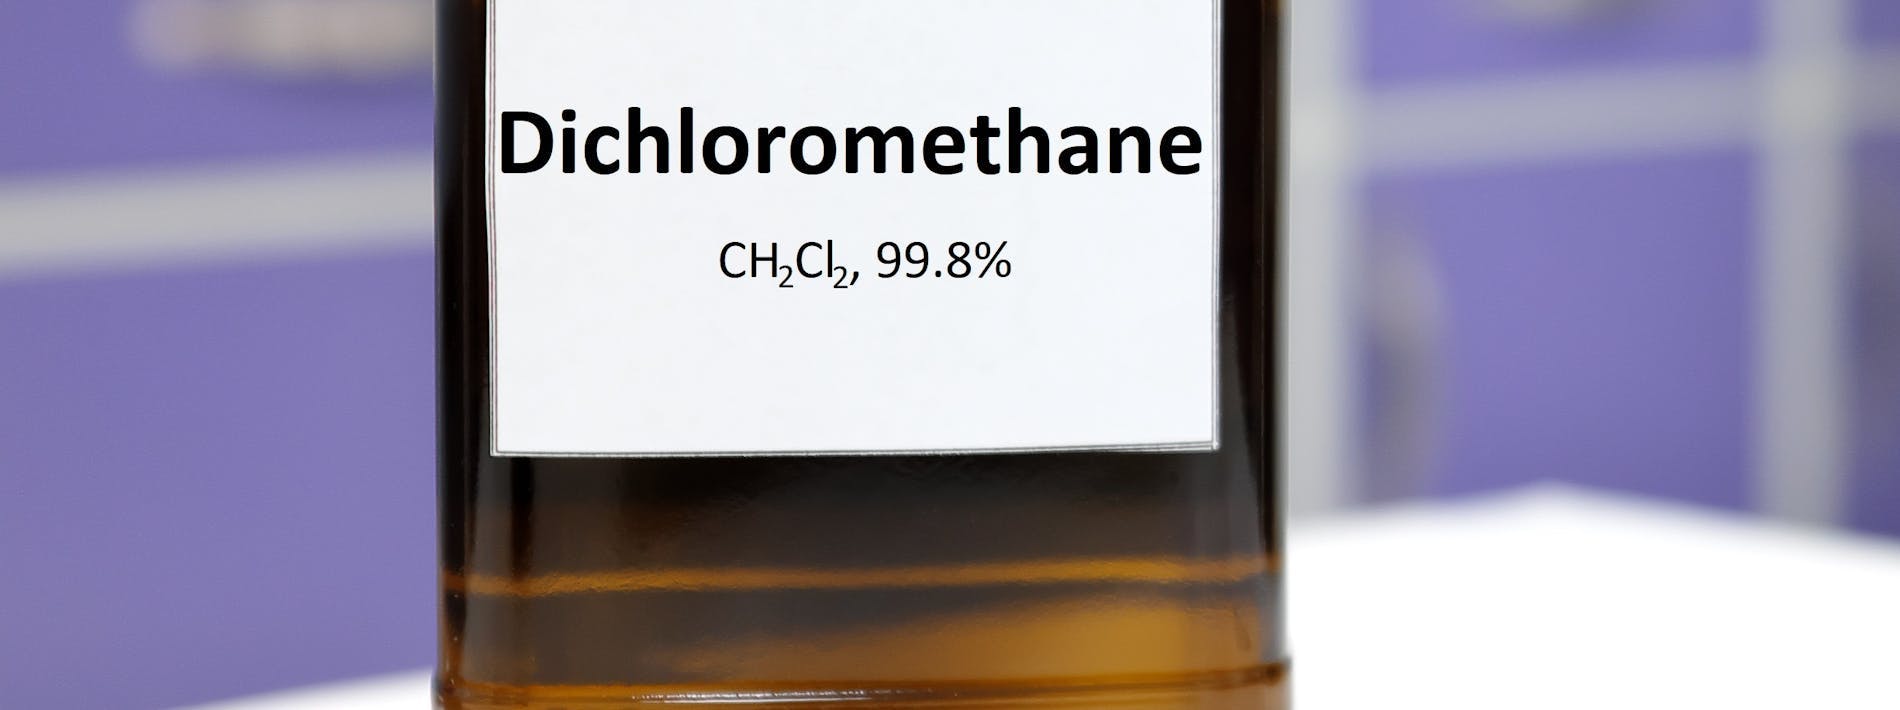 Dichloromethane Chemical in Bottle